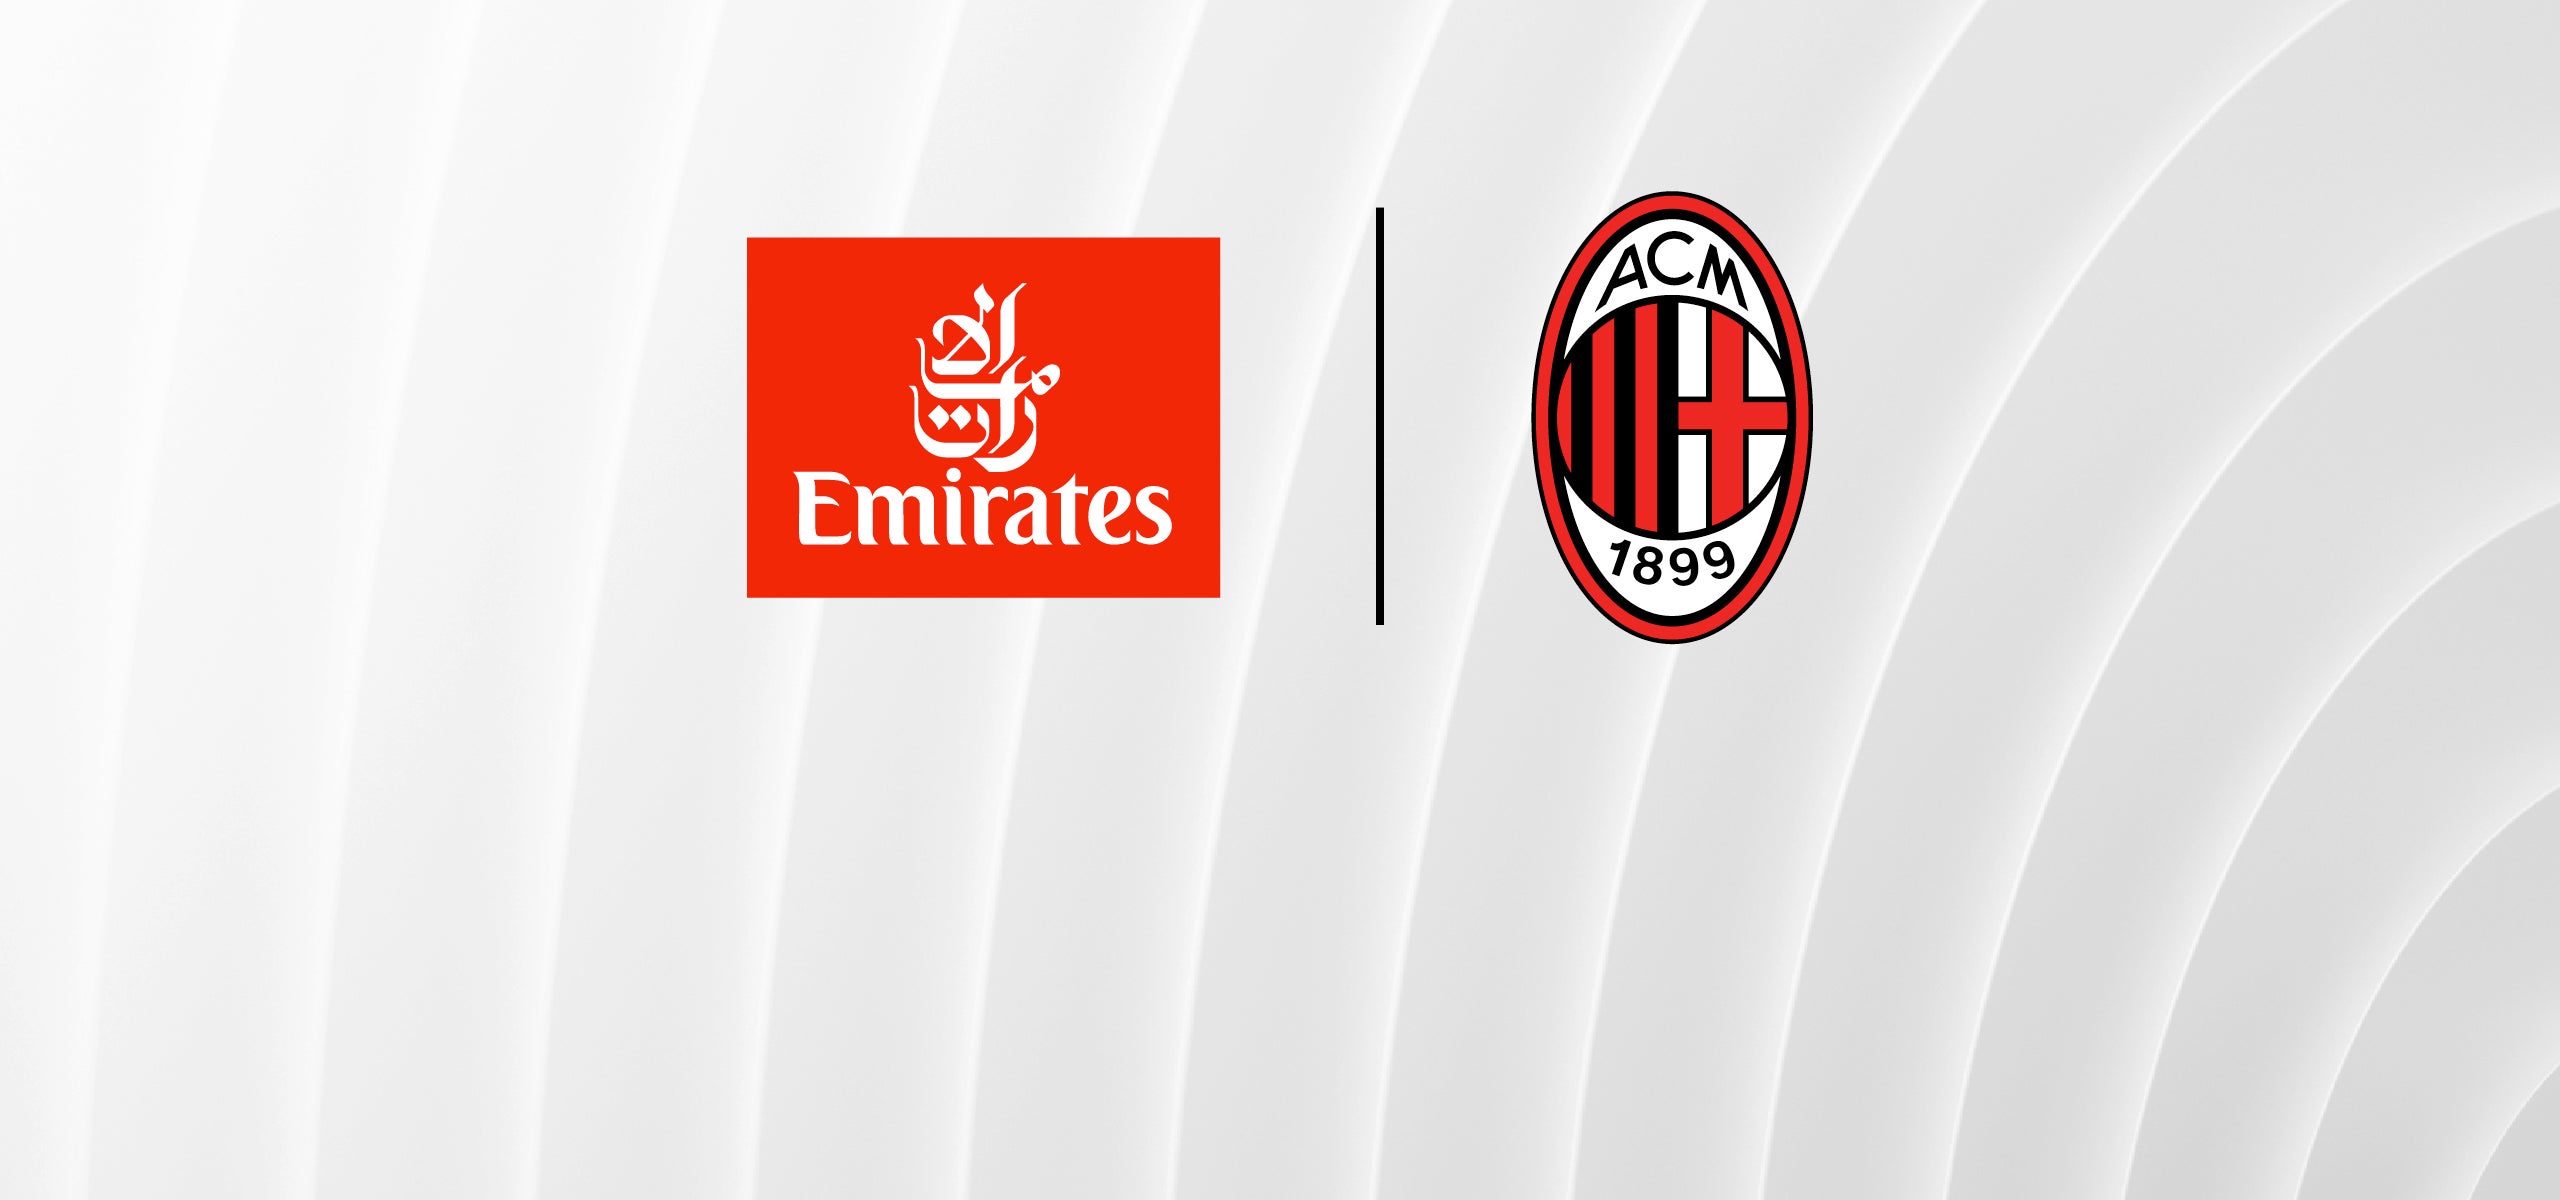 Emirates and AC Milan extend long-standing partnership | AC Milan